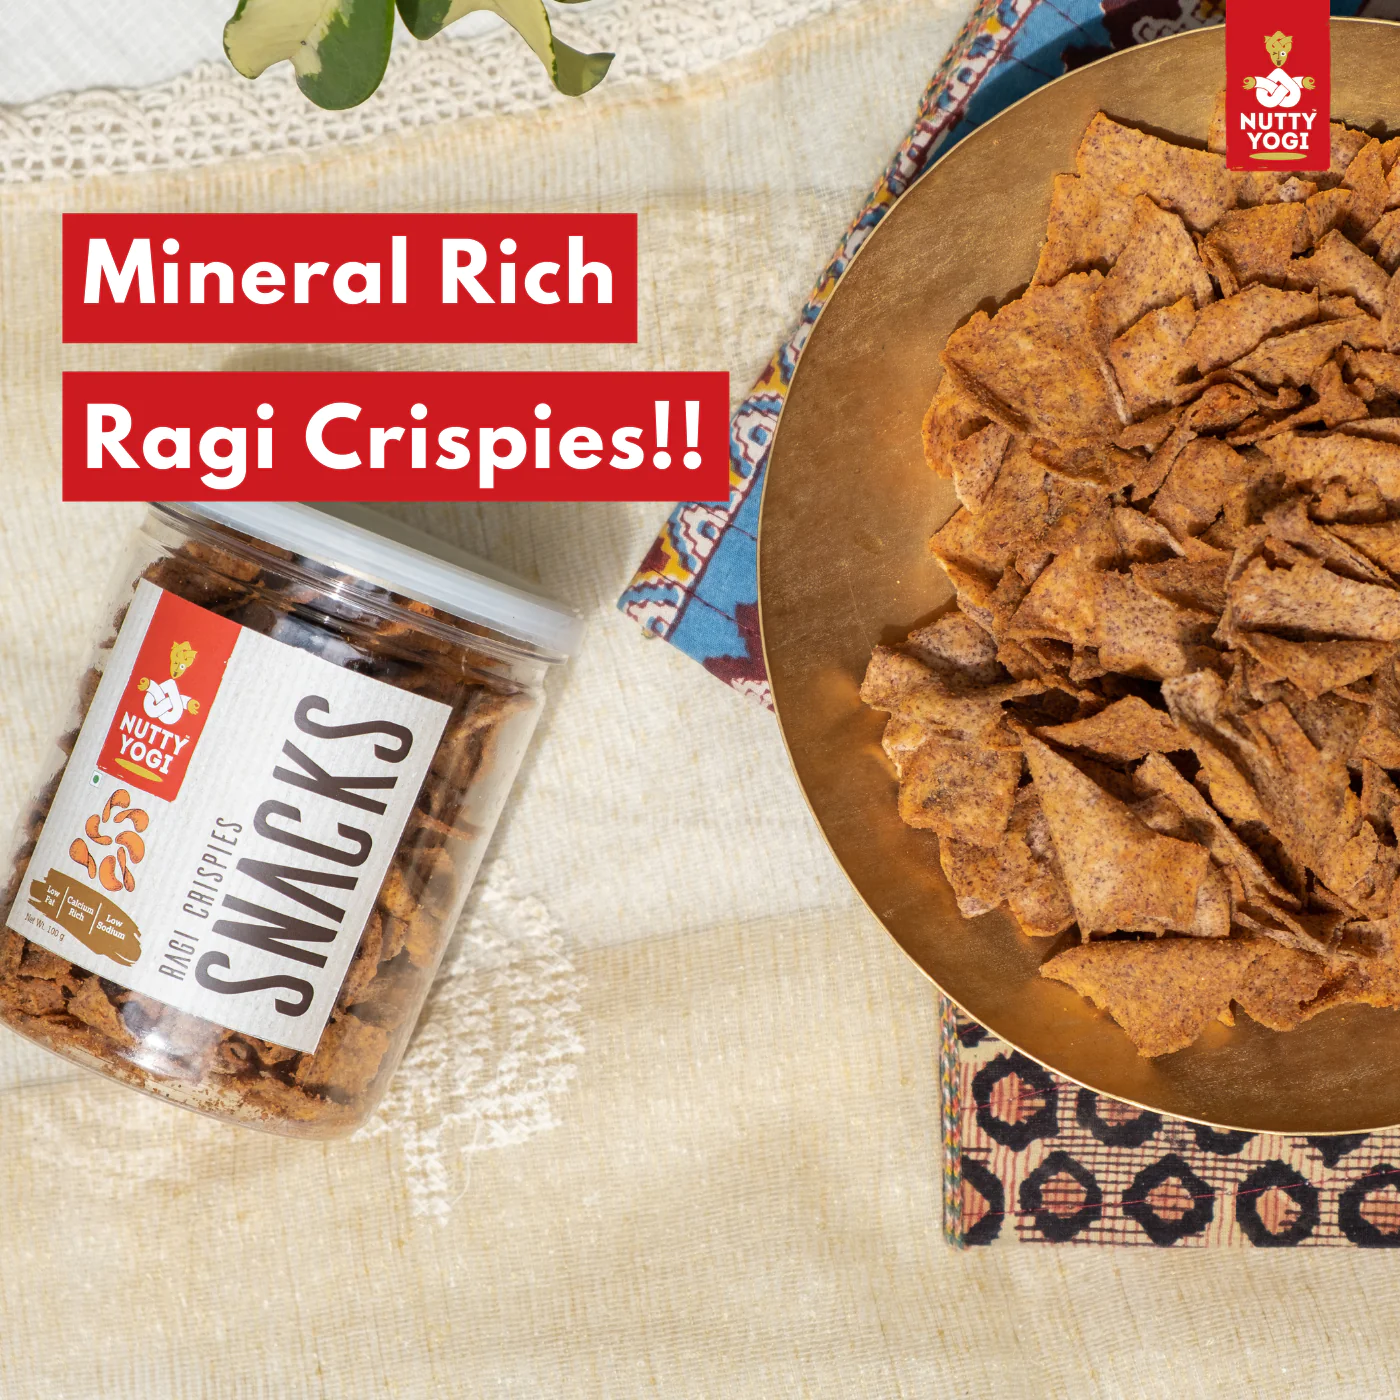 Product: Nutty Yogi Ragi Chips